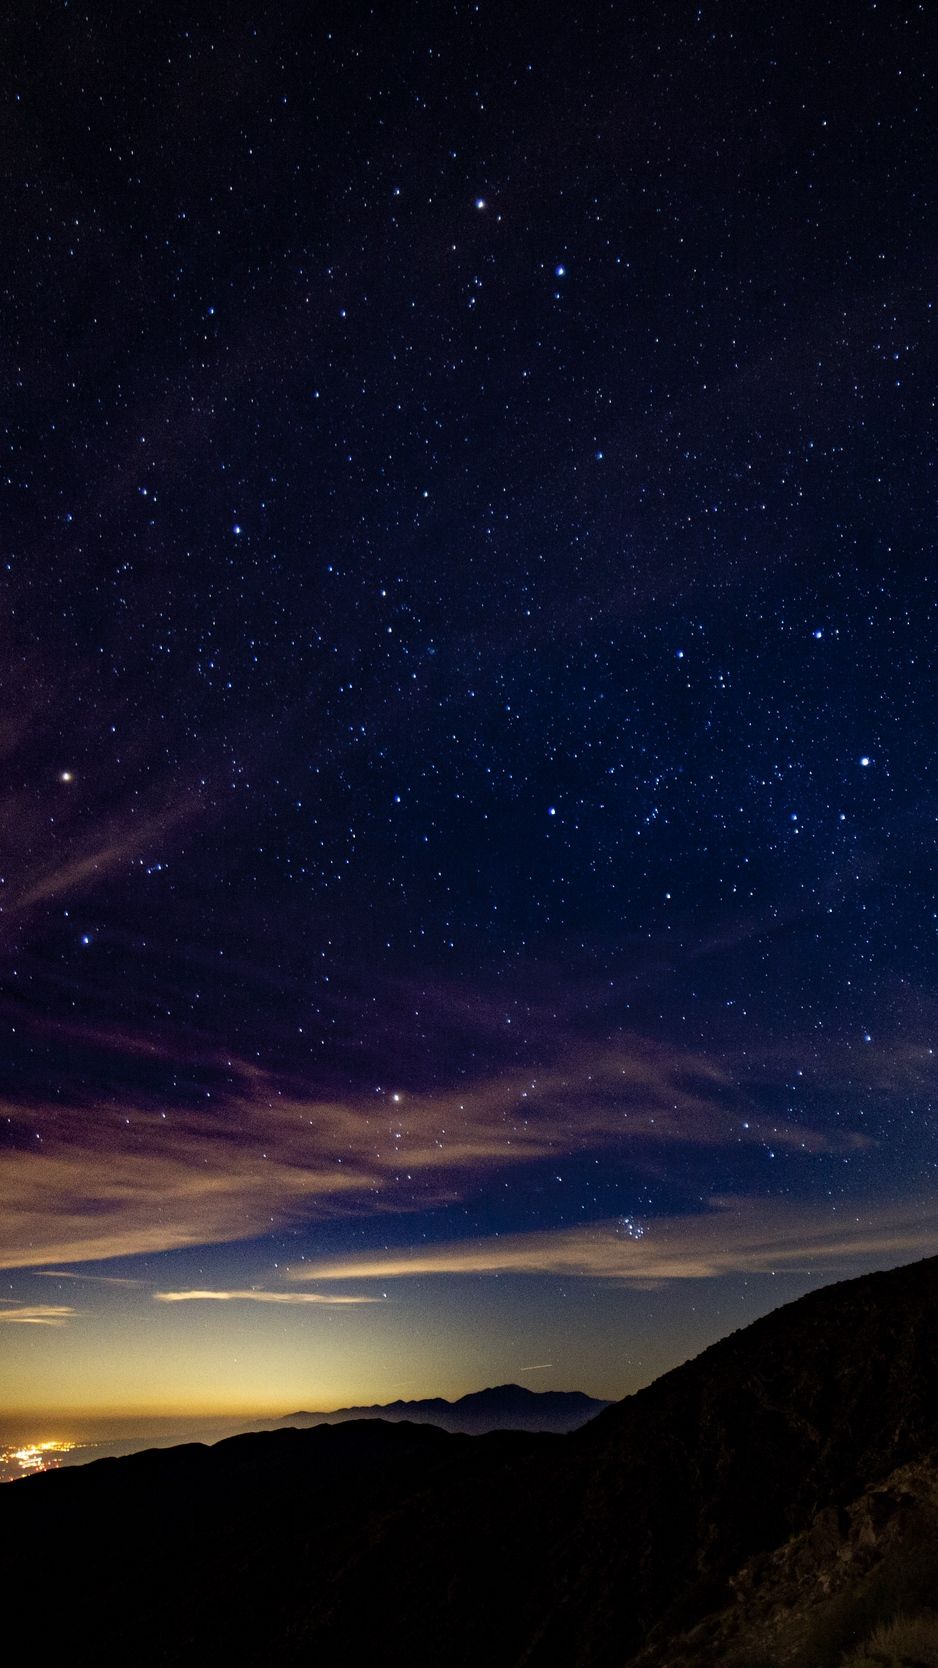 Starry sky mountains stars night wallpaper